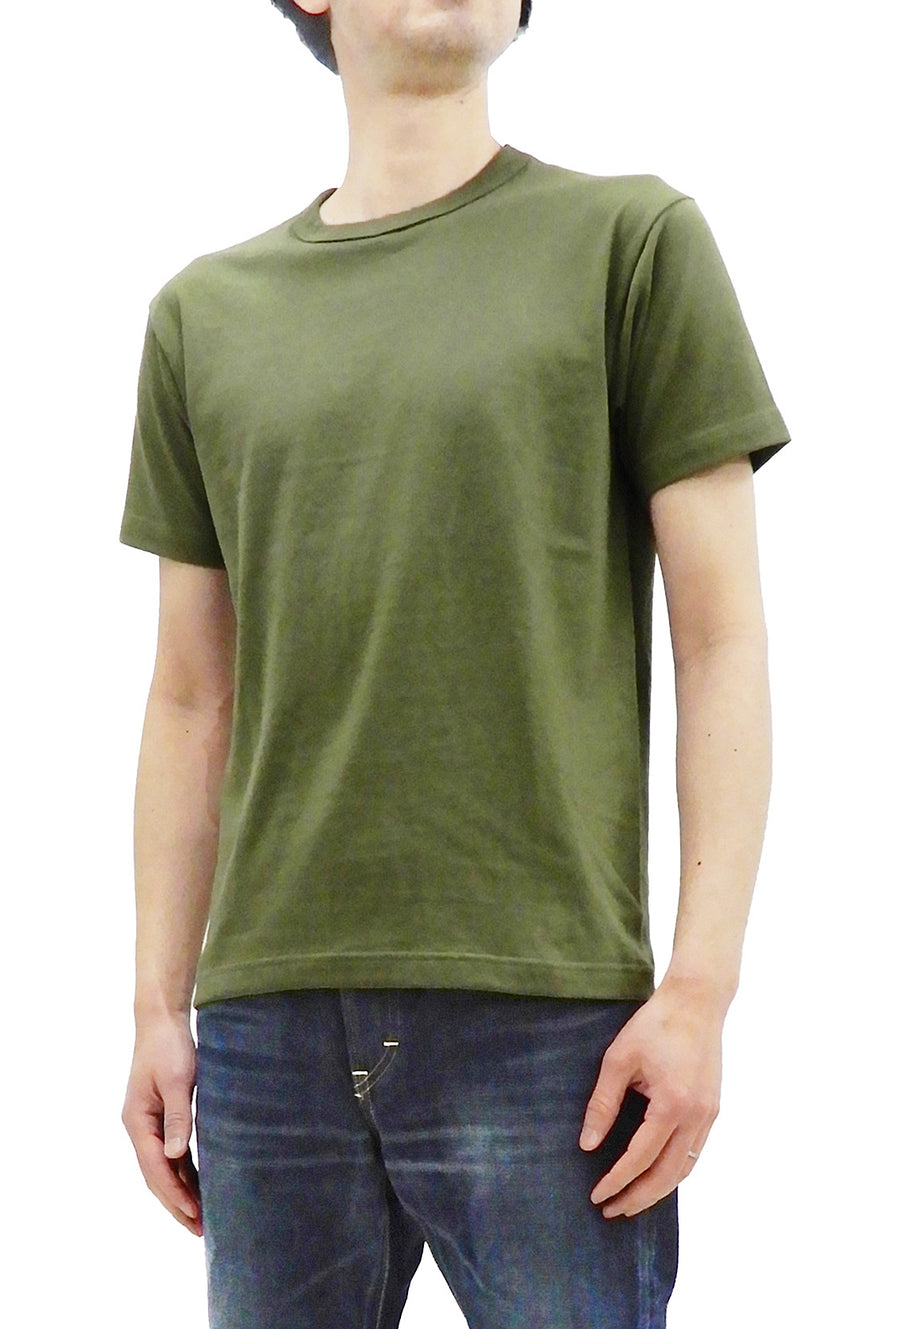 Buzz Rickson T-shirt – Sleeve Tee Short Pine-Avenue shirt T Plain Men\'s BR Clothes shop Loopwheel RODEO-JAPAN